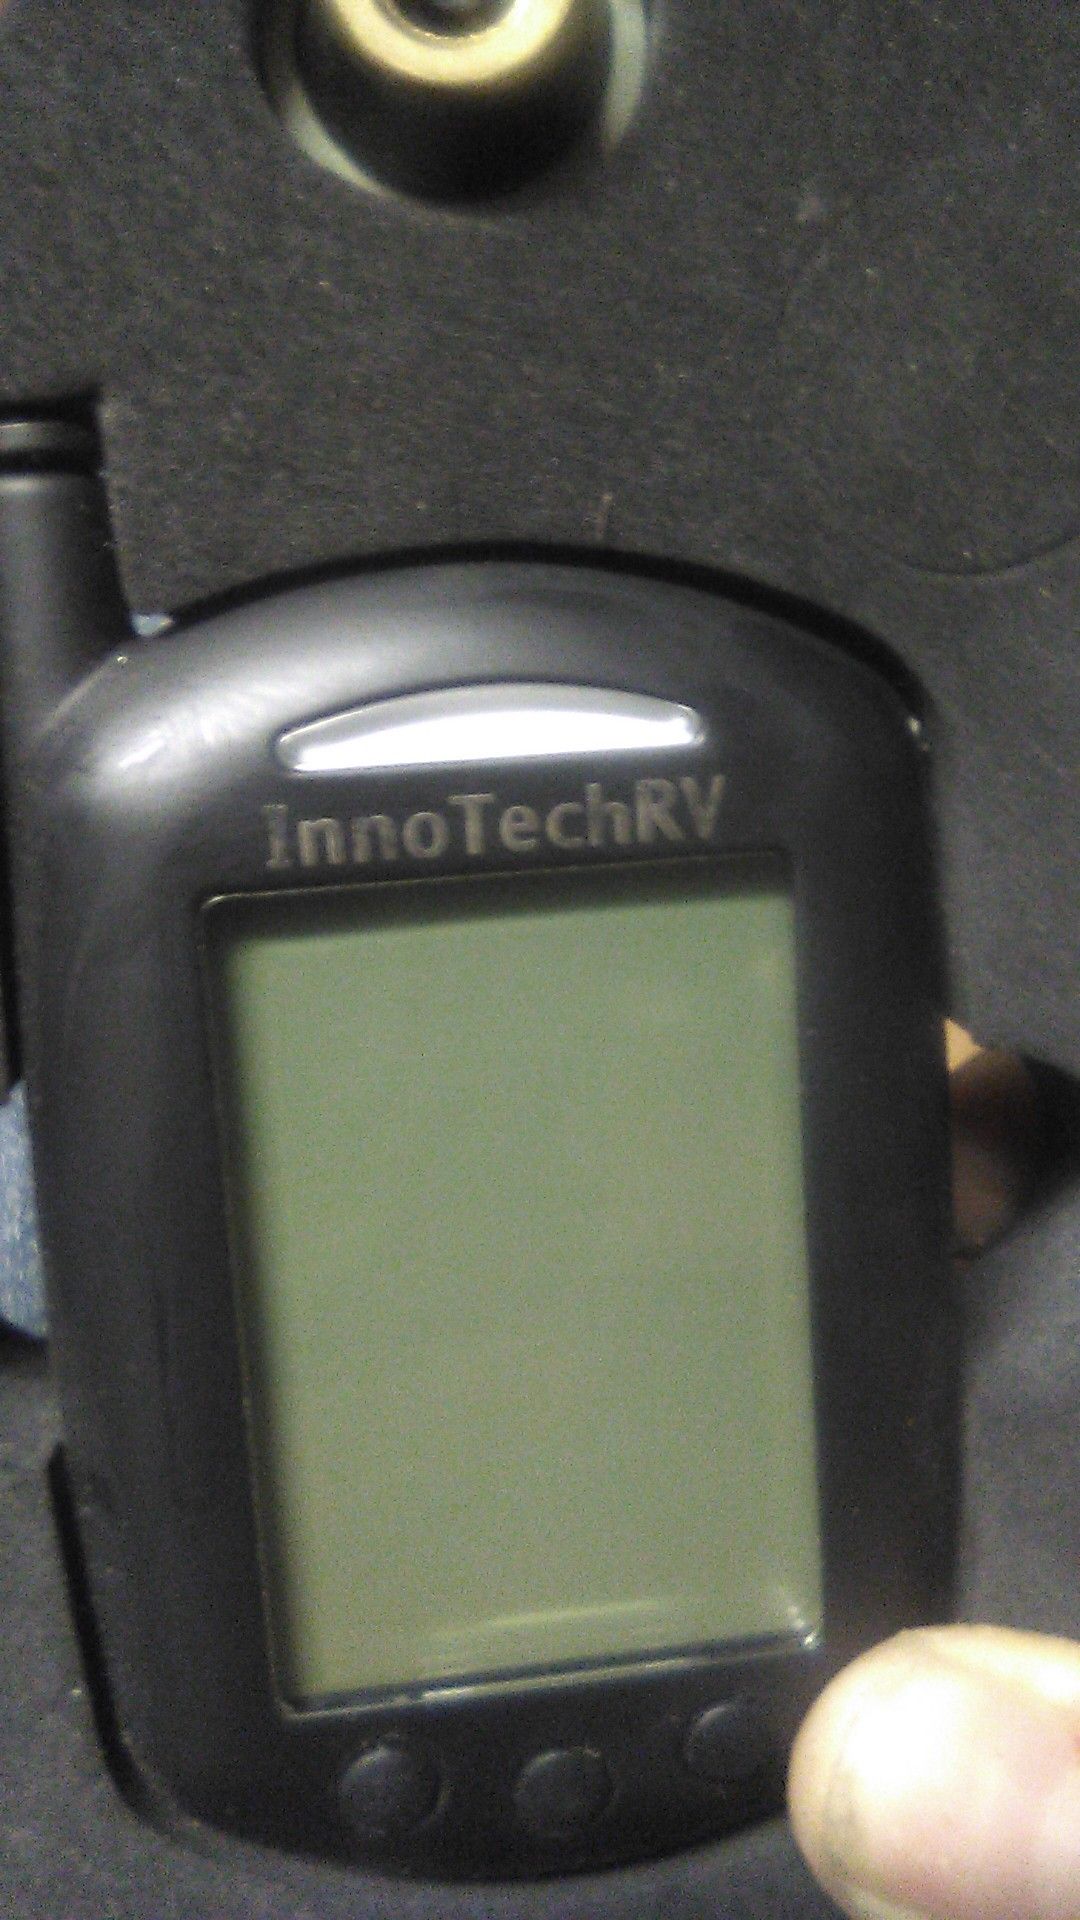 Innotech RV tire pressure monitoring system